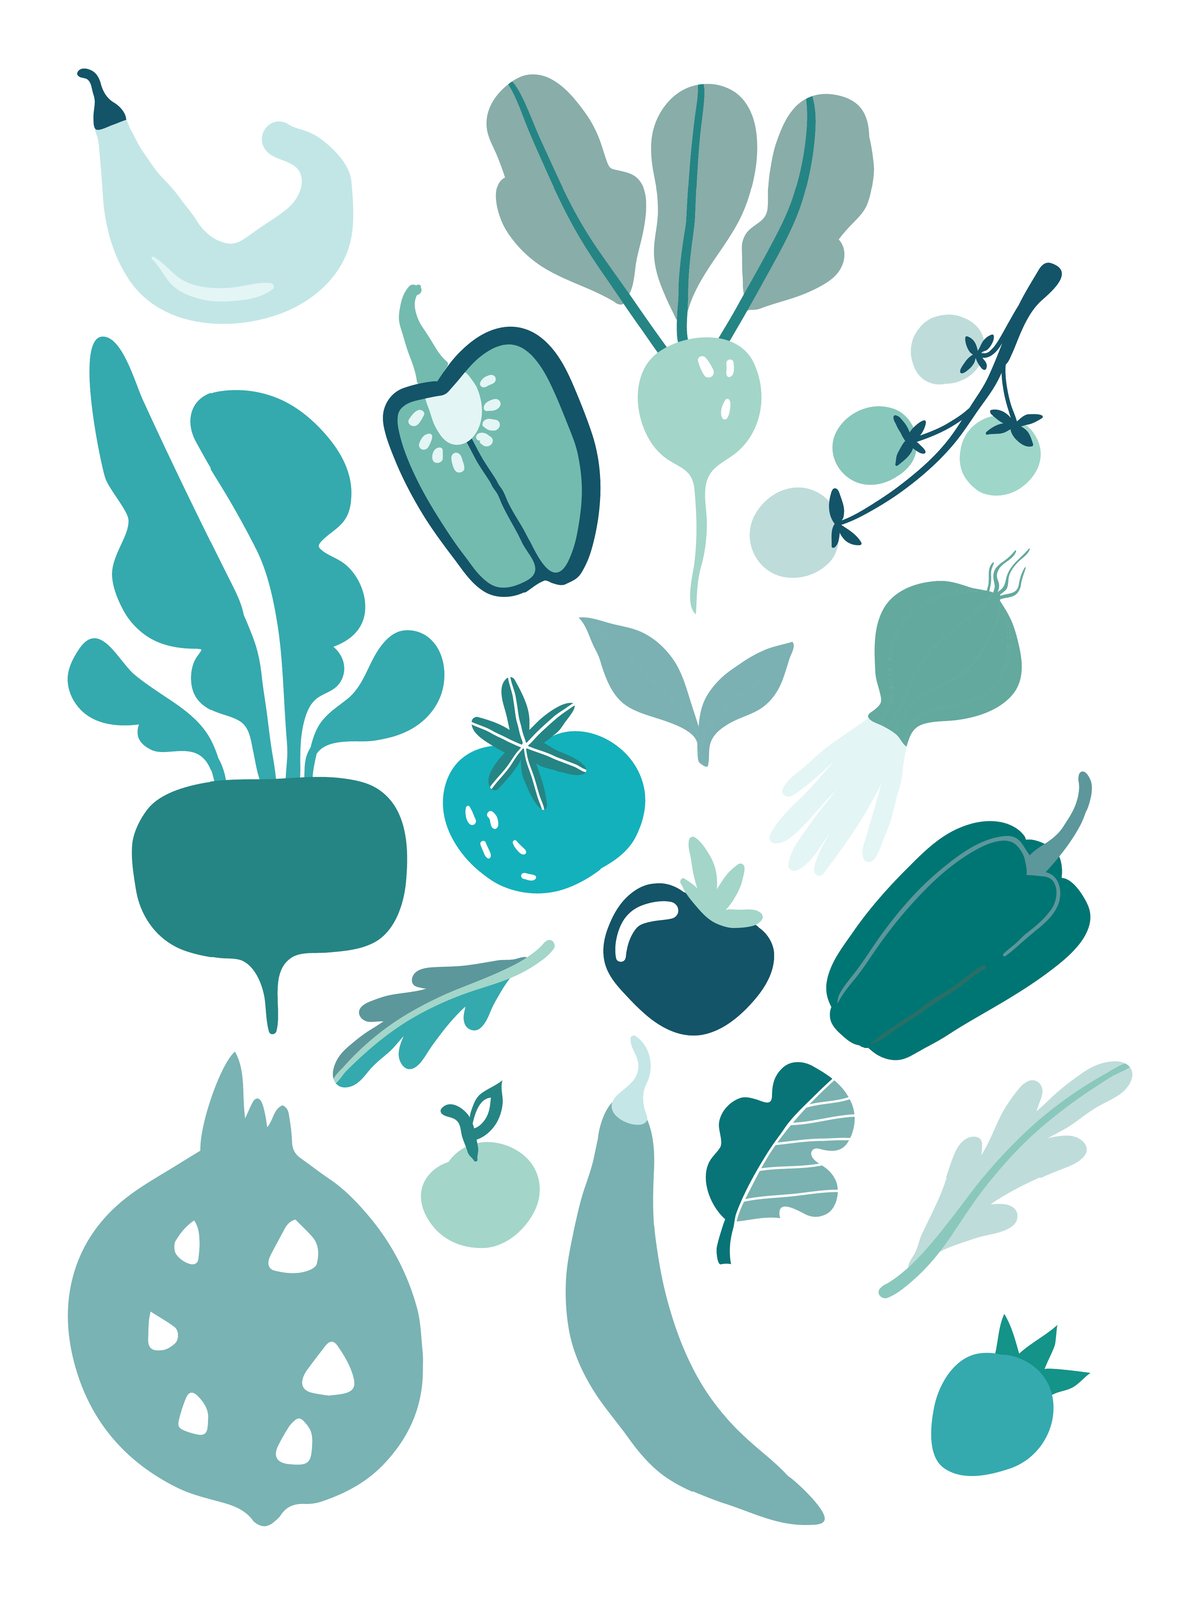 Fruit and Veggie Print Teal